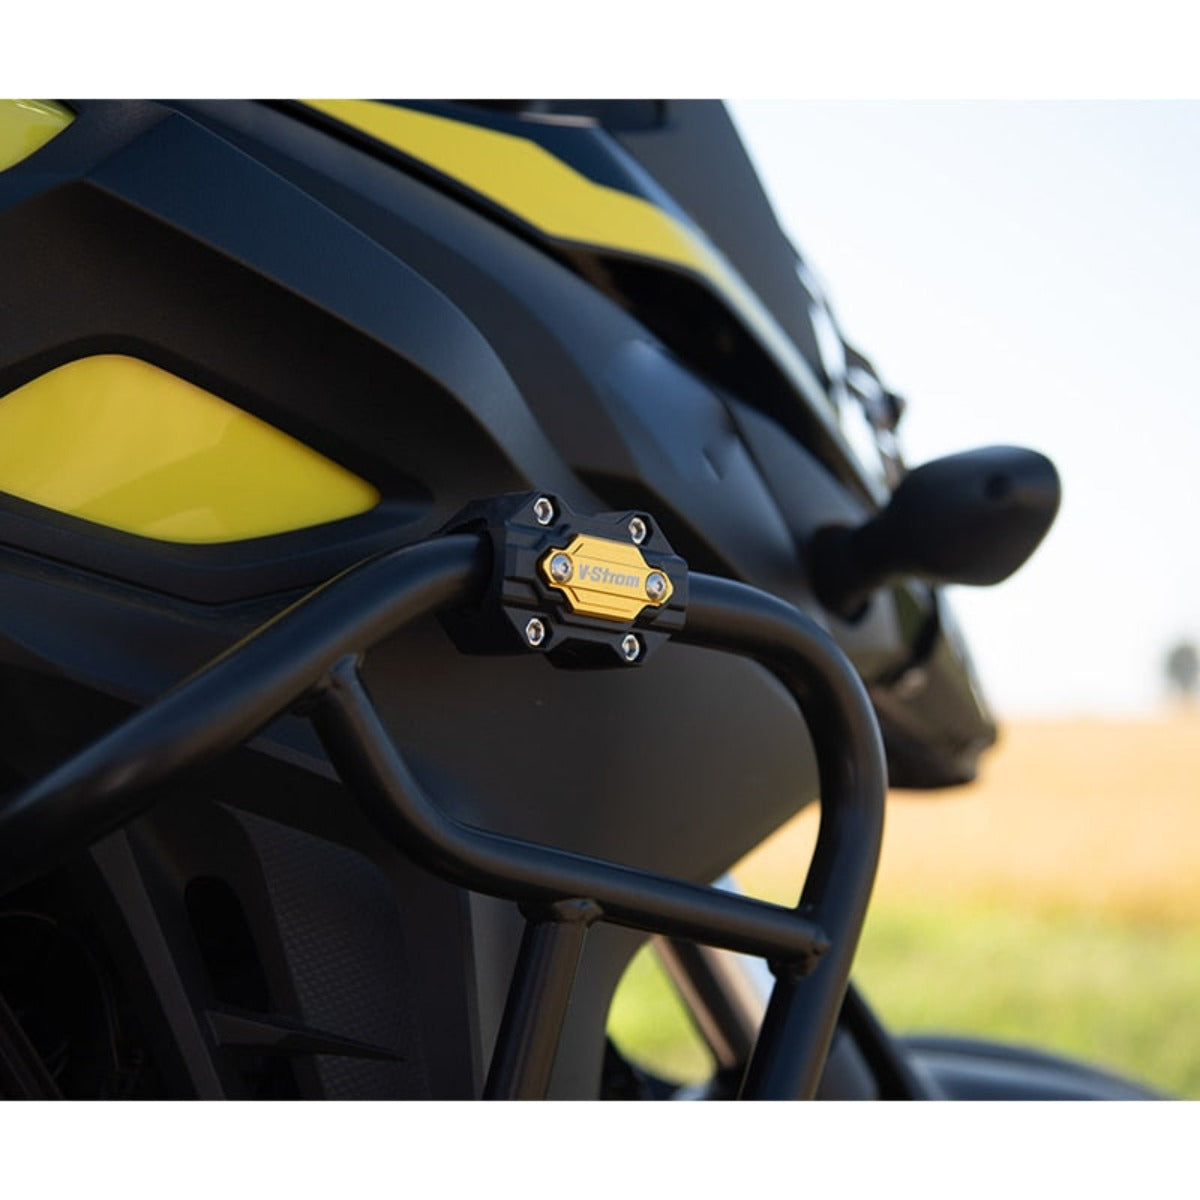 Motorcycle Accessories Engine Guard Bumper Protection Decorative Block For Suzuki, Black/Titanium